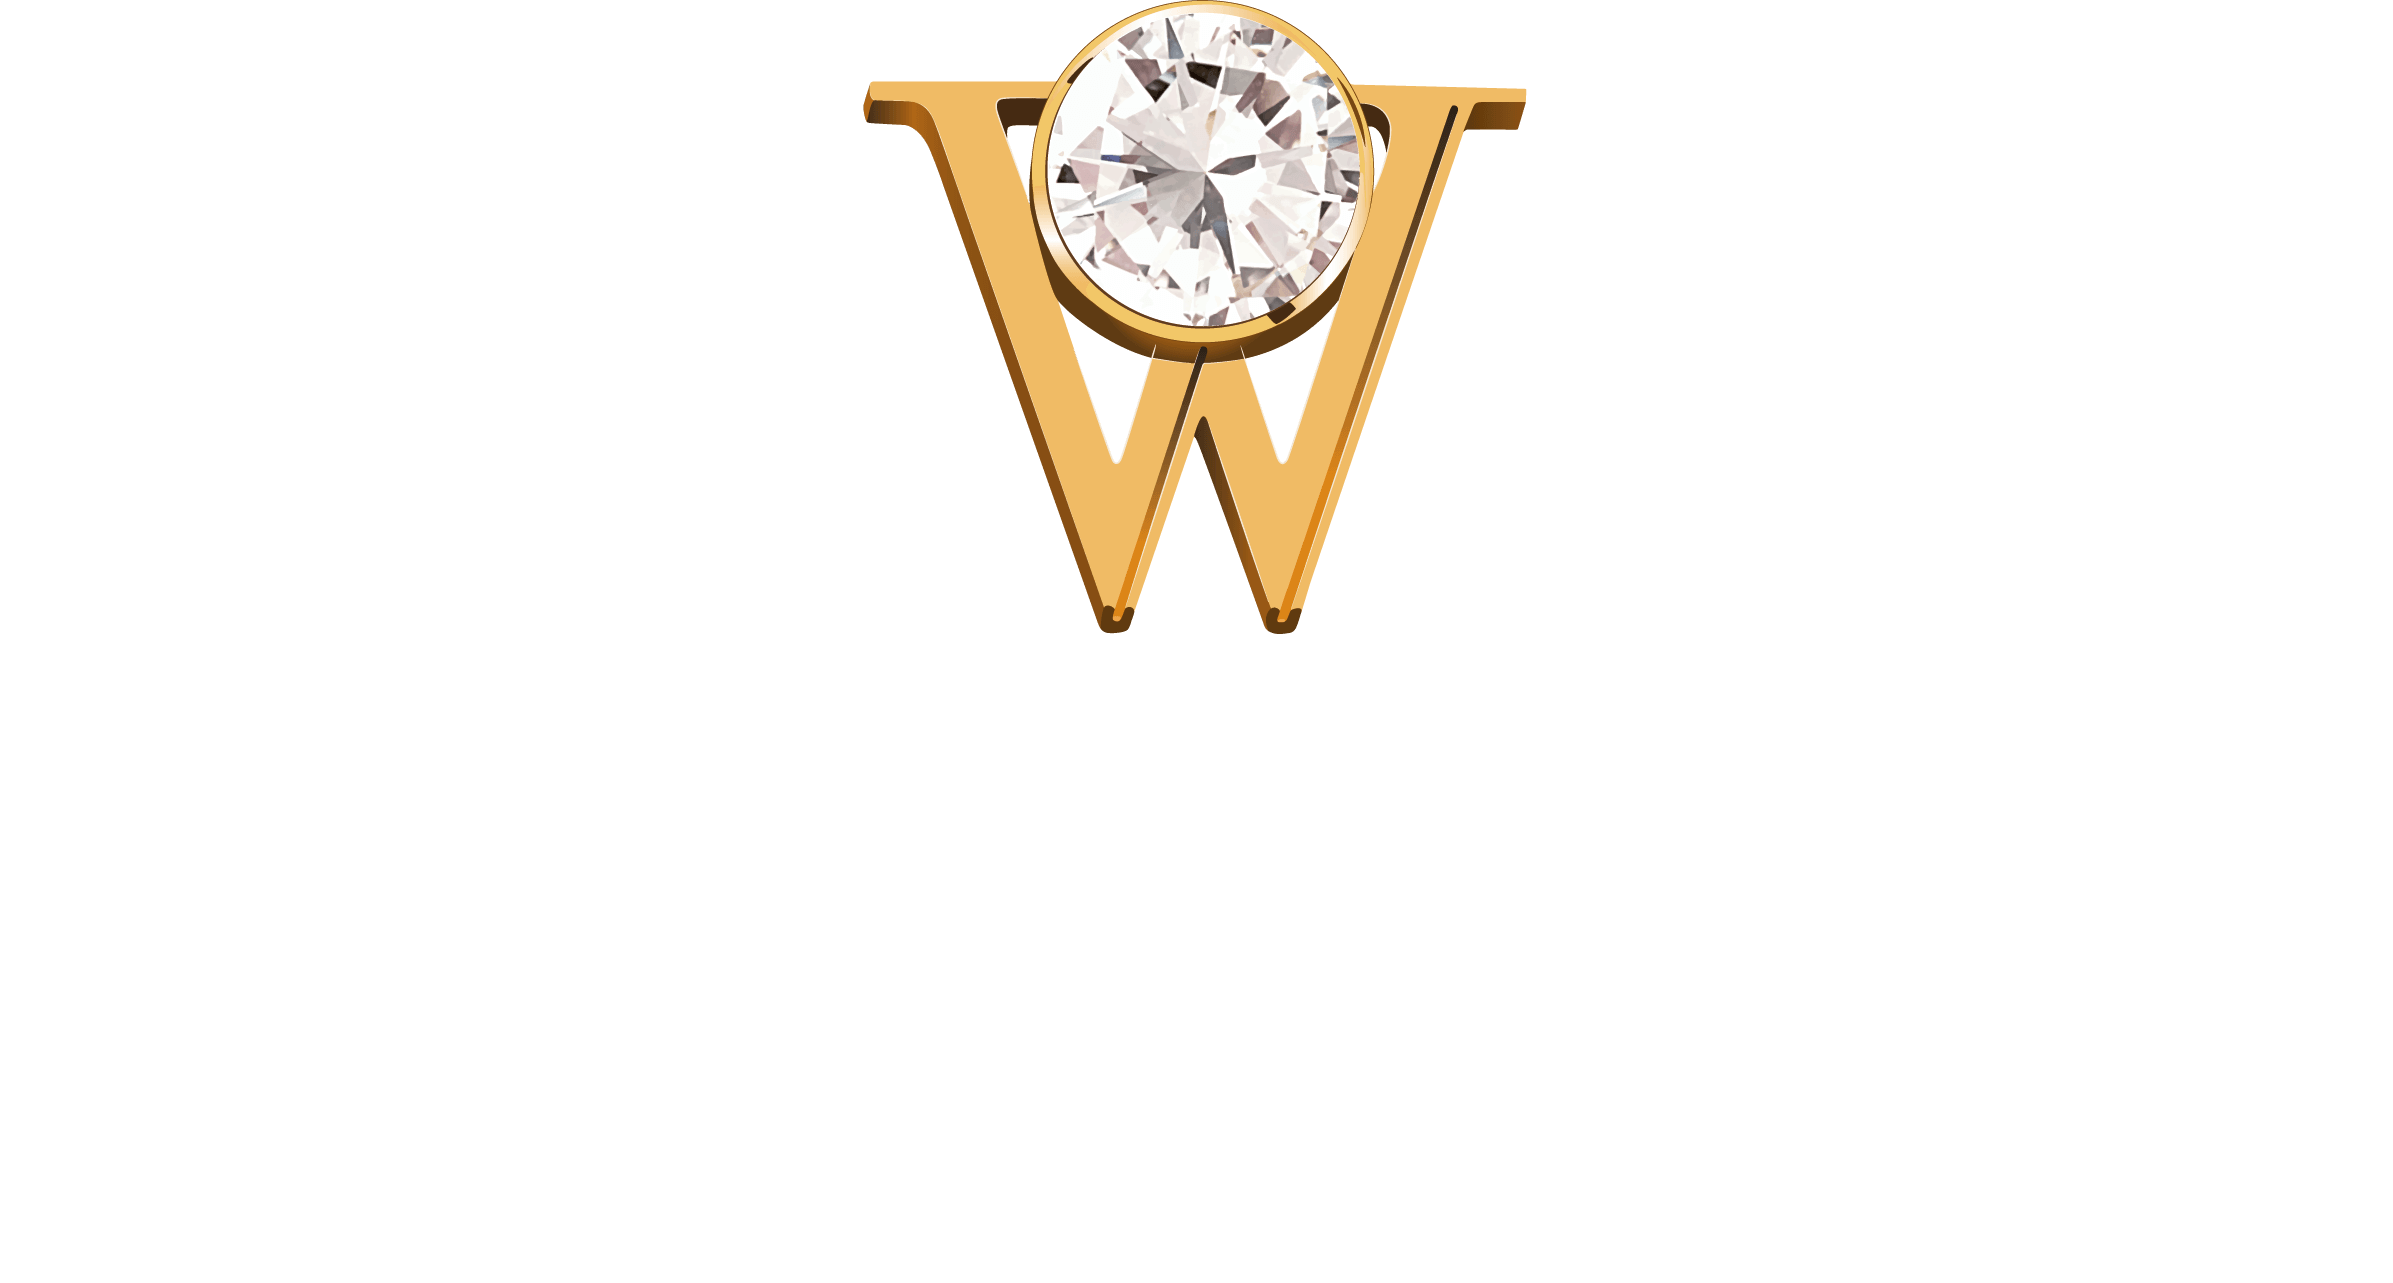 Wellendorff Logo